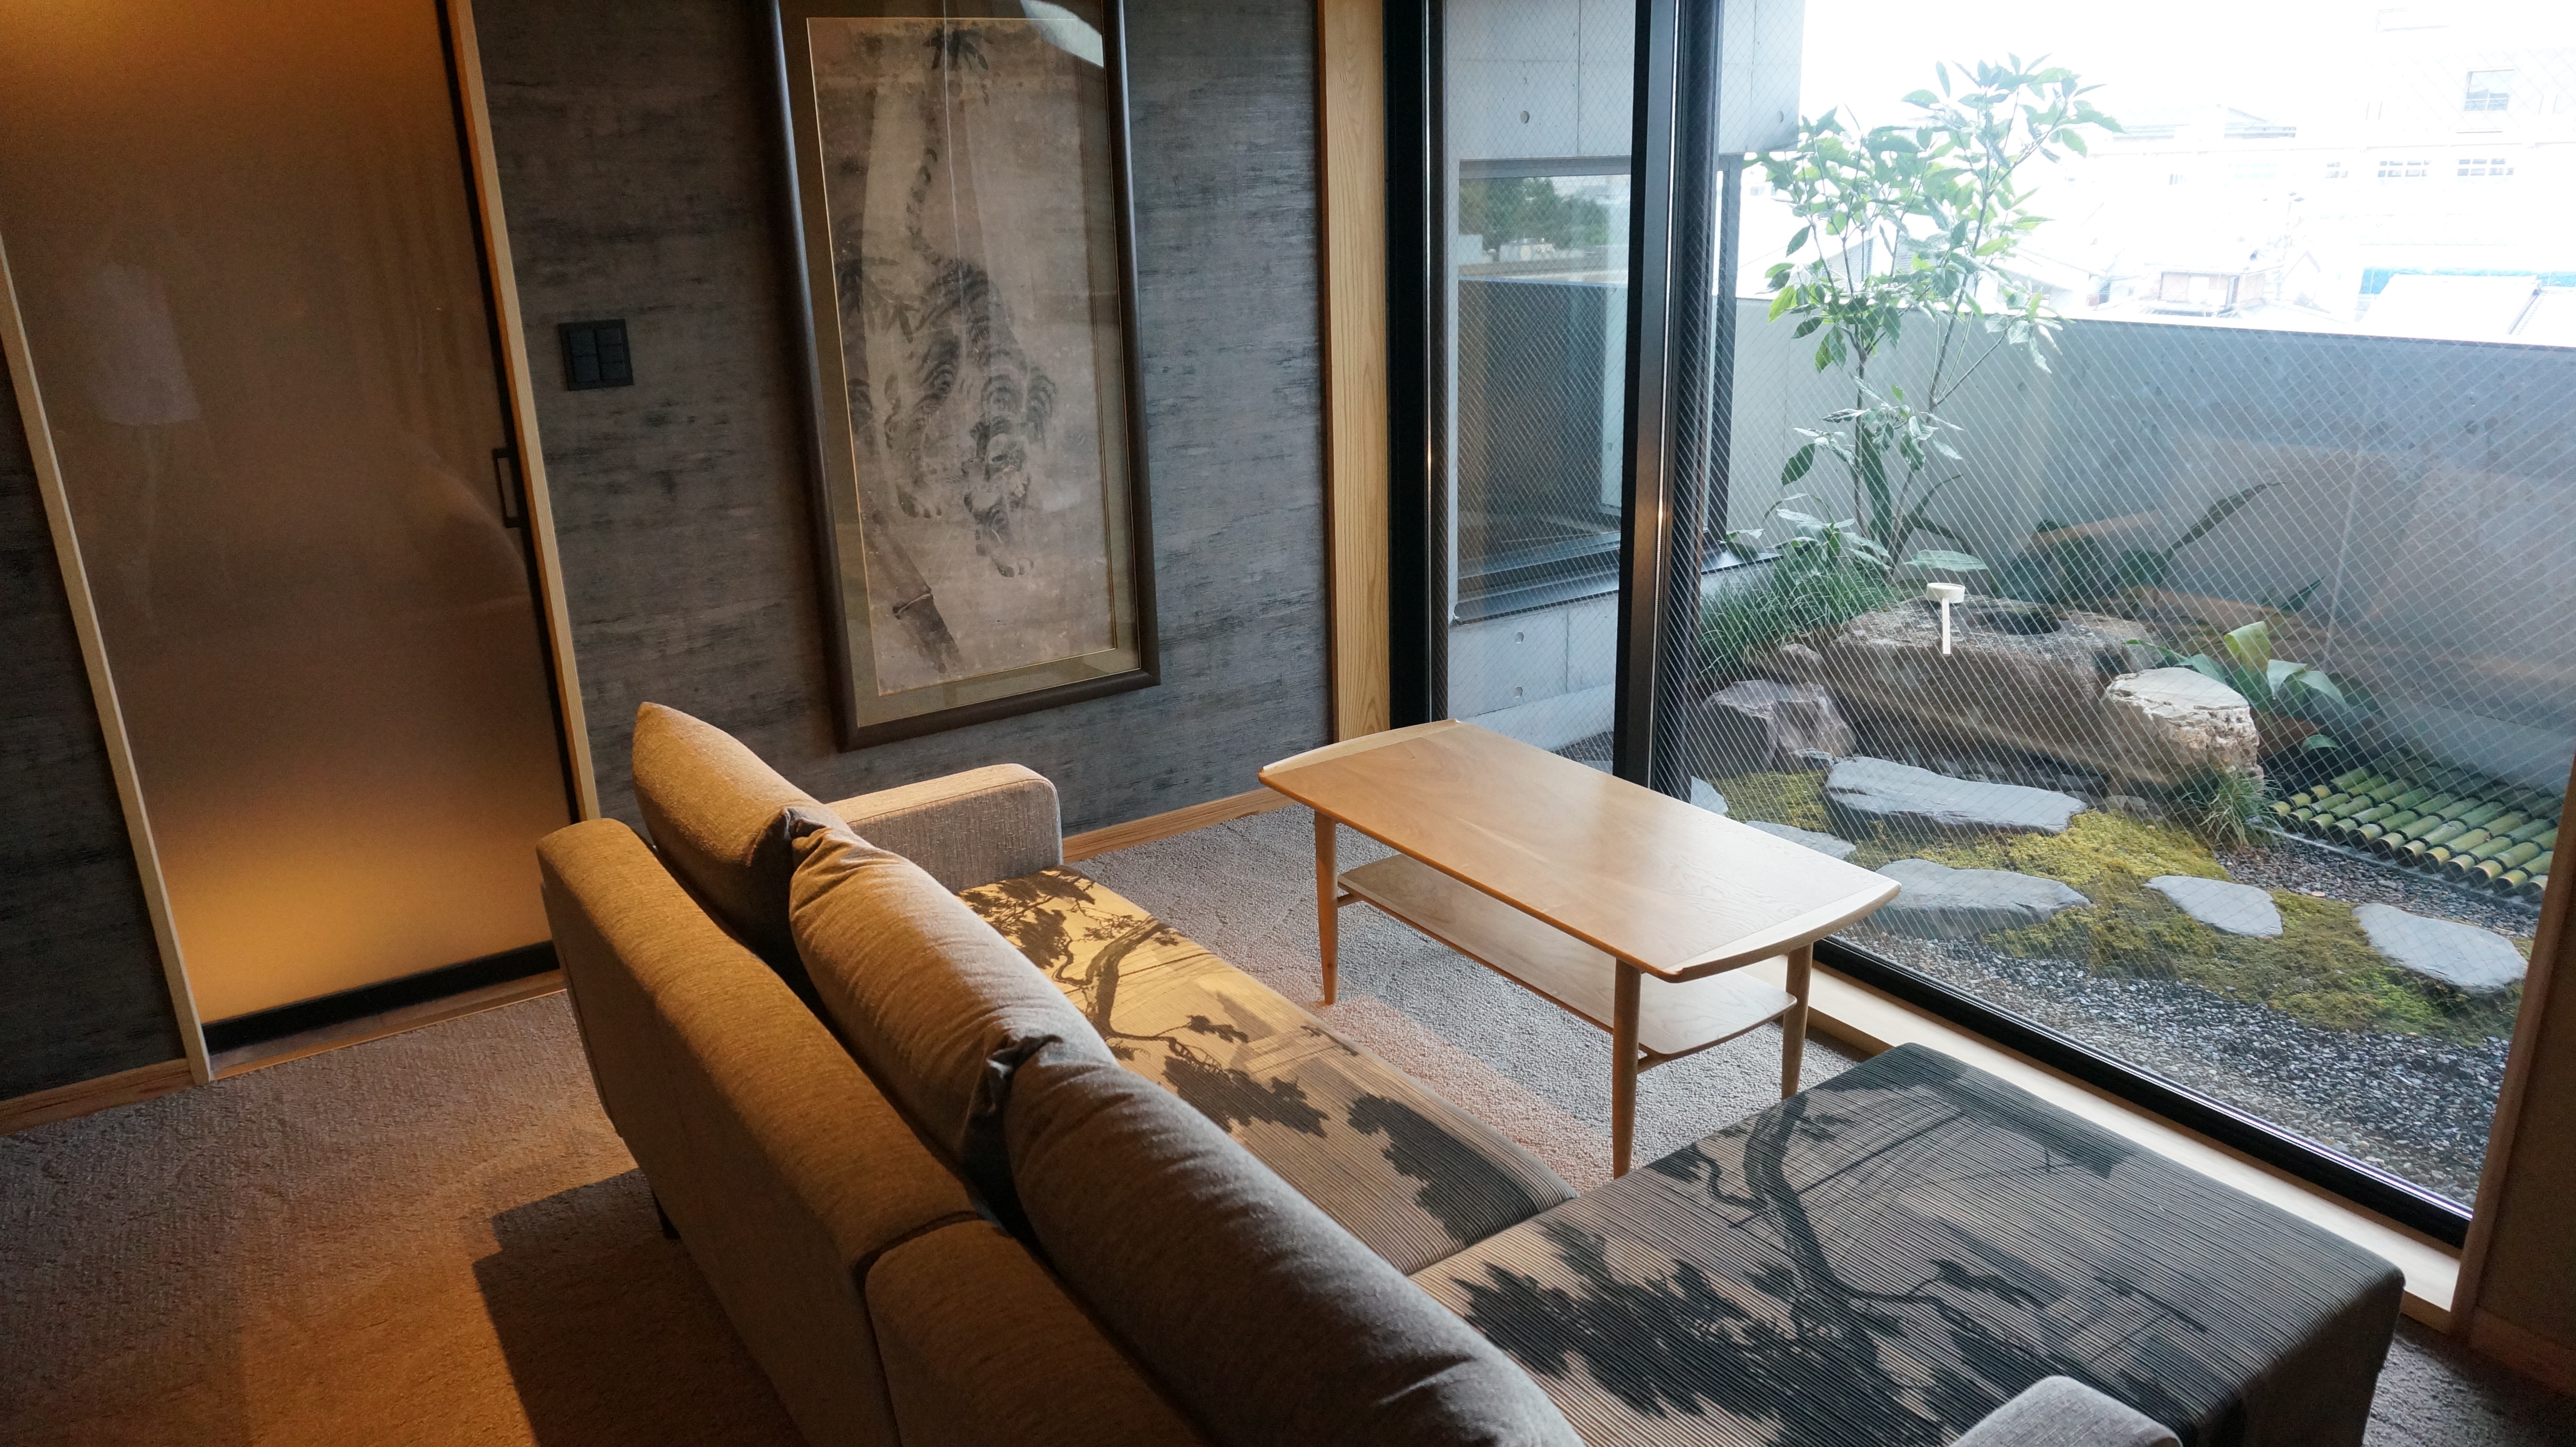 Kamar 501: Bola taman sofa Armani dan taman Jepang